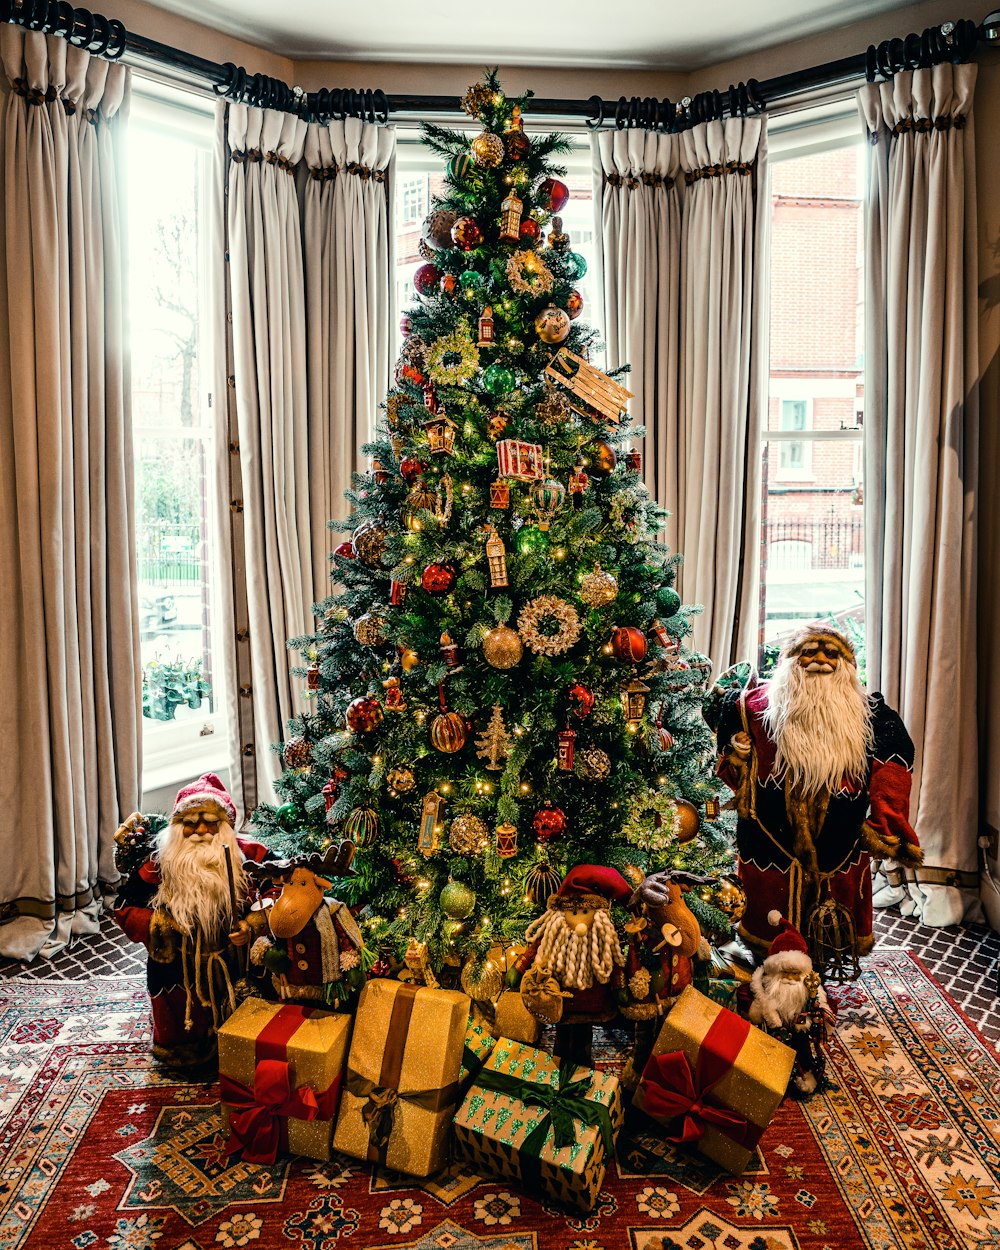 Christmas tree between Santa Claus dolls